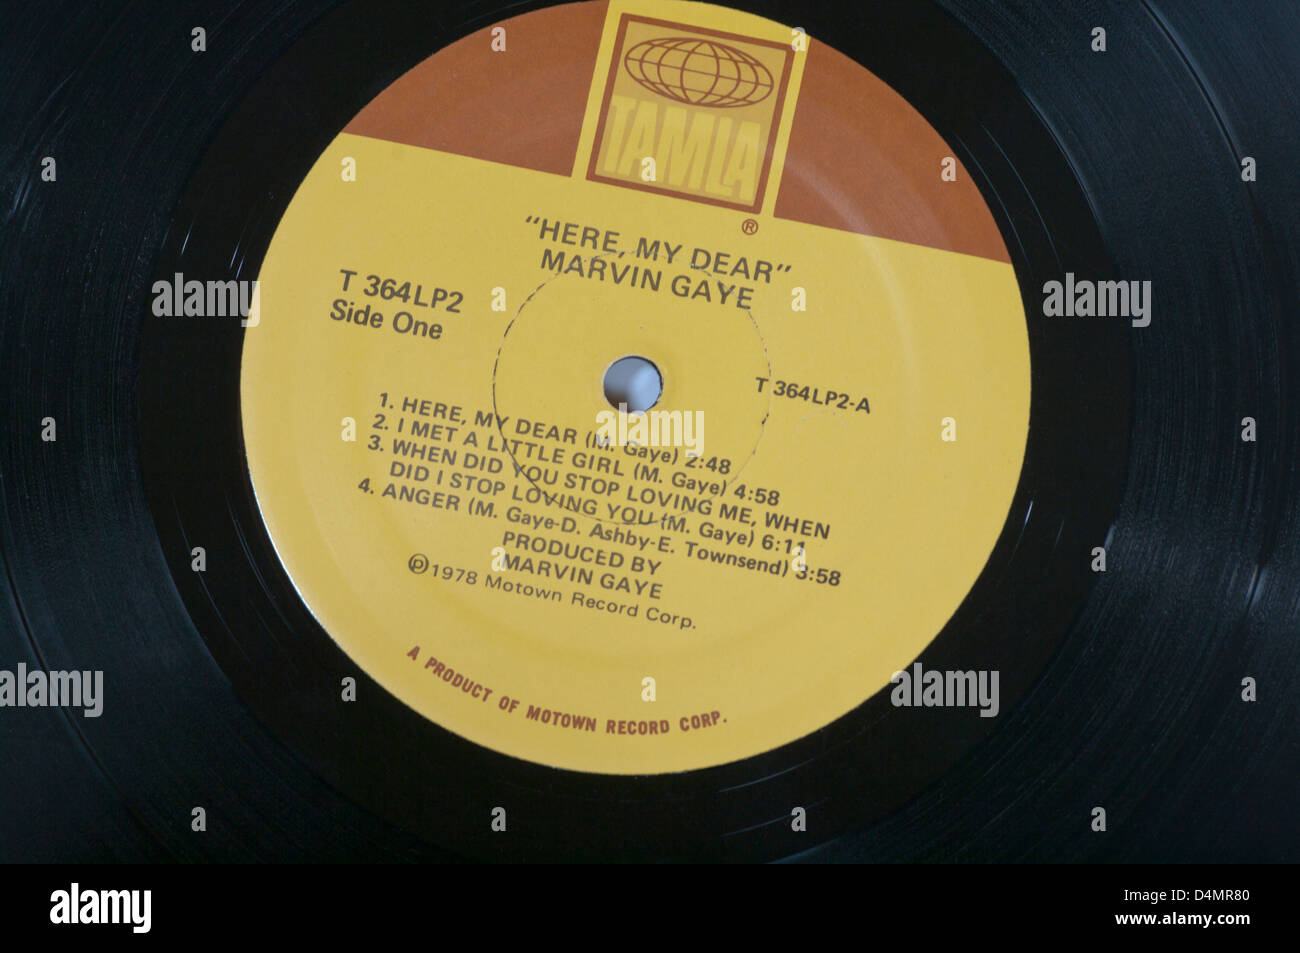 Tamla Record Label On A Vinyl LP Record Stock Photo